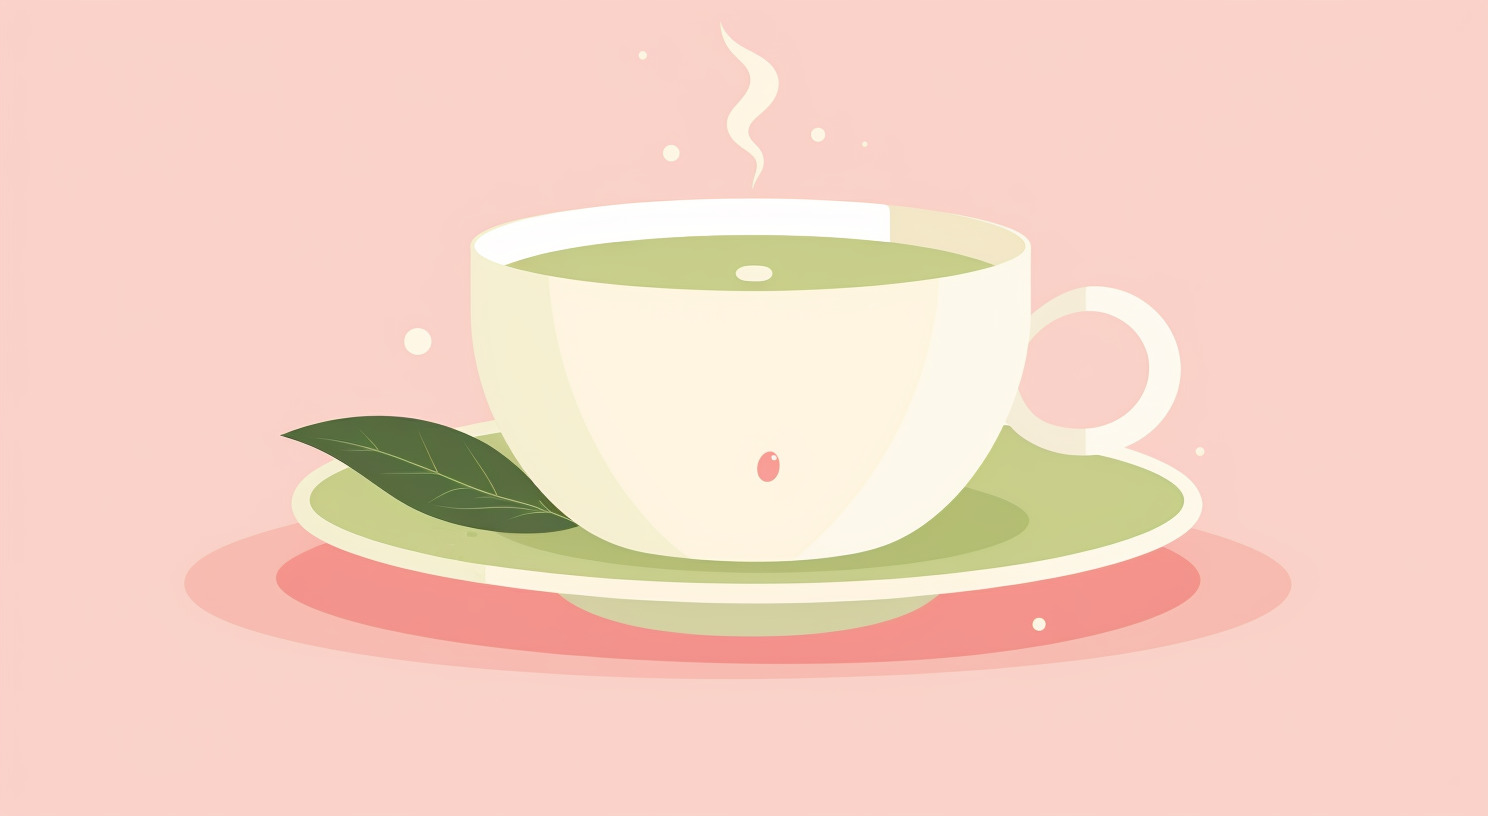 A mug of green tea sits on a saucer.